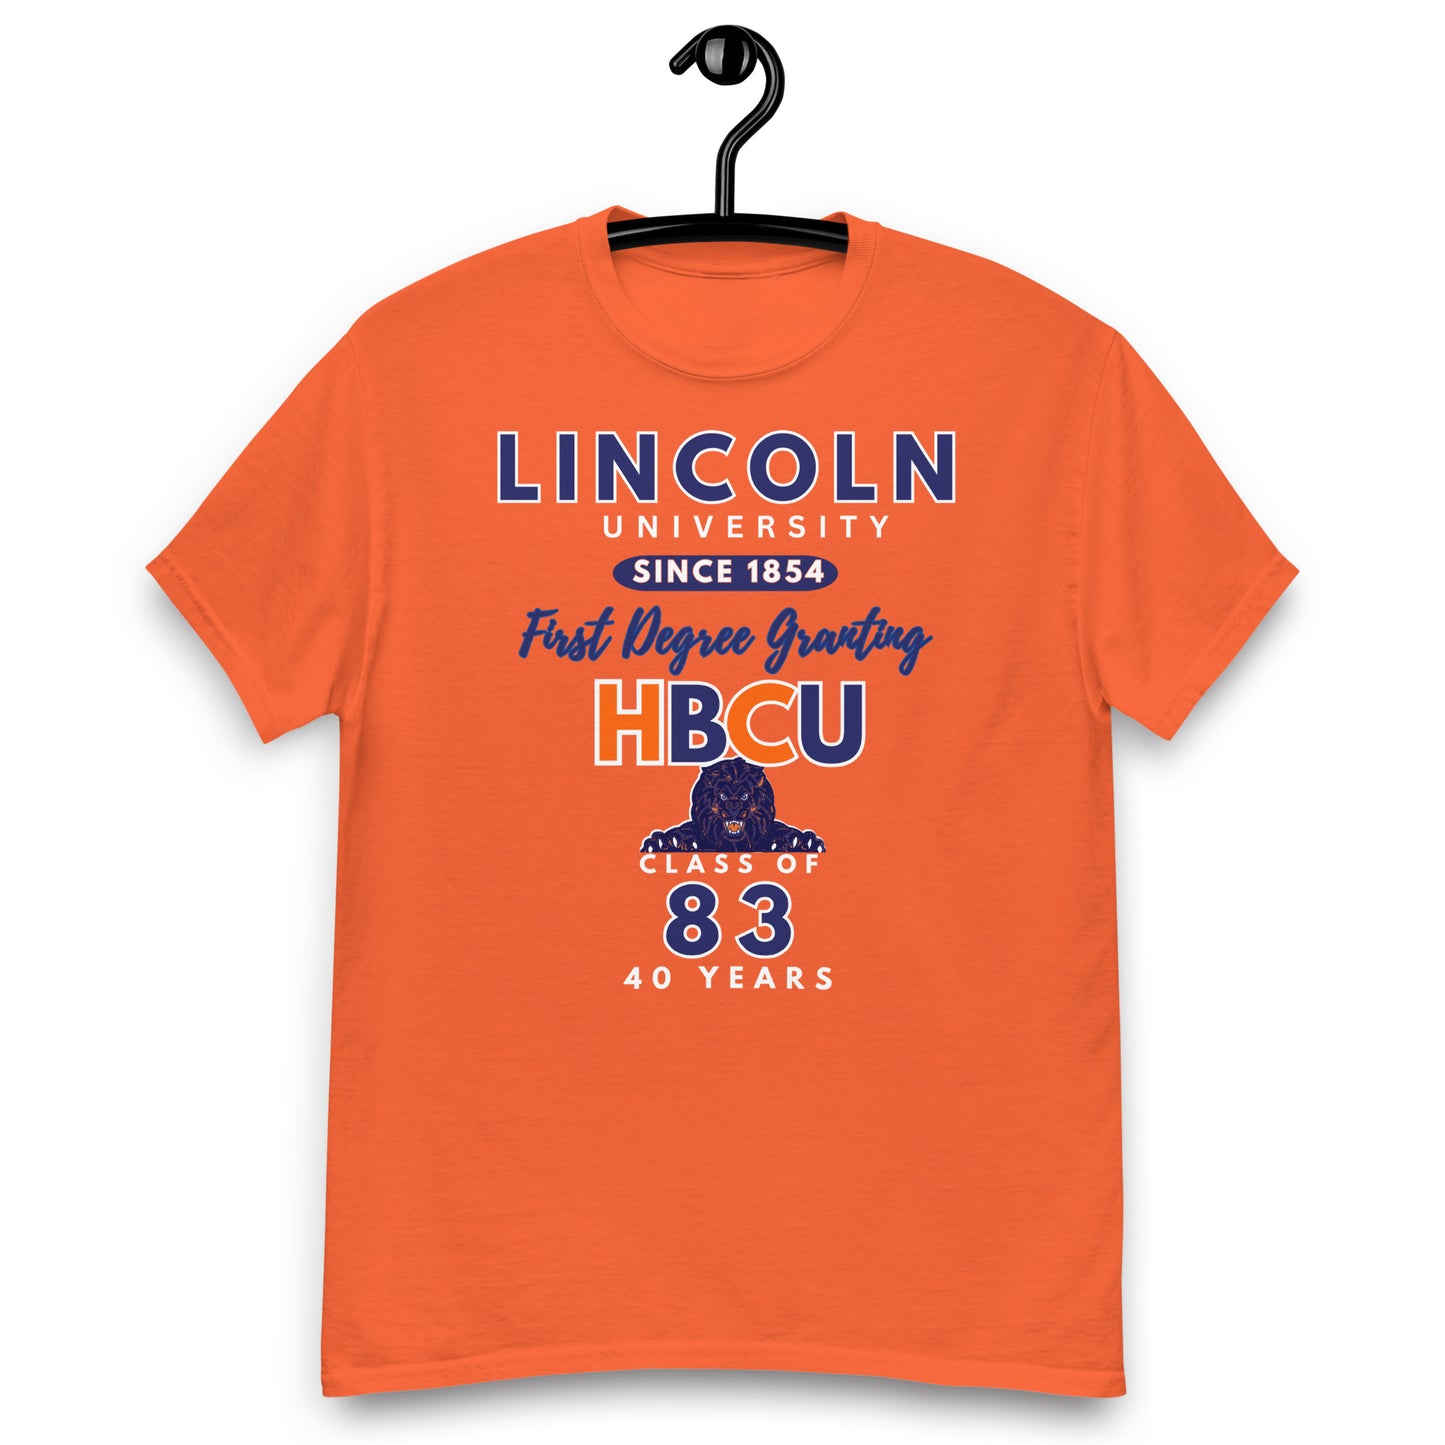 '83 - LU - HBCU - Orange